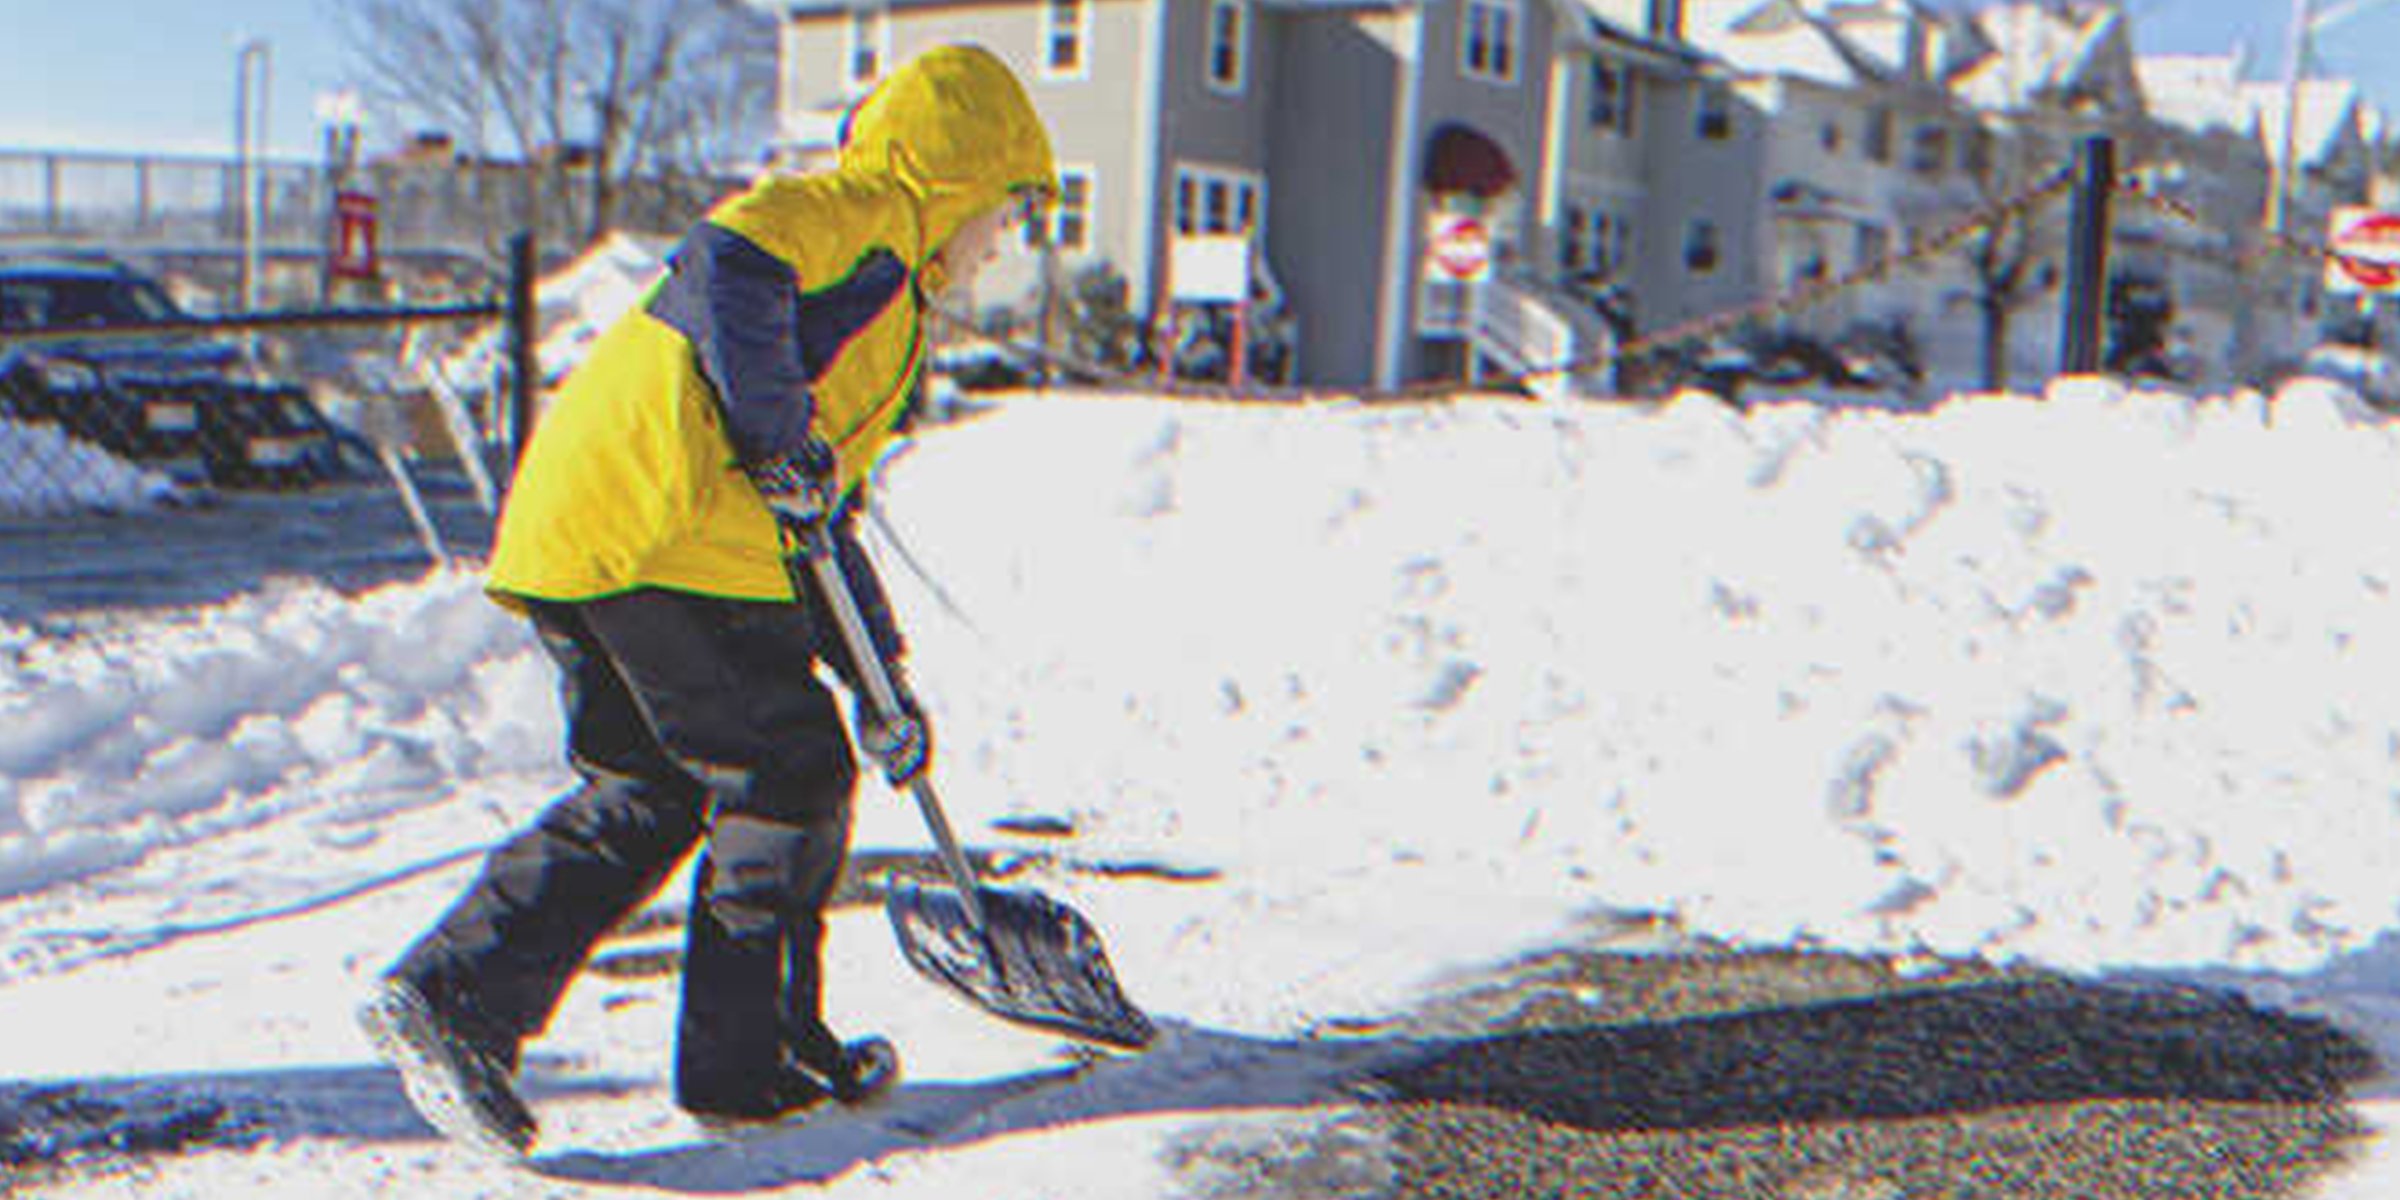 A boy shoveling snow | Source: Shutterstock